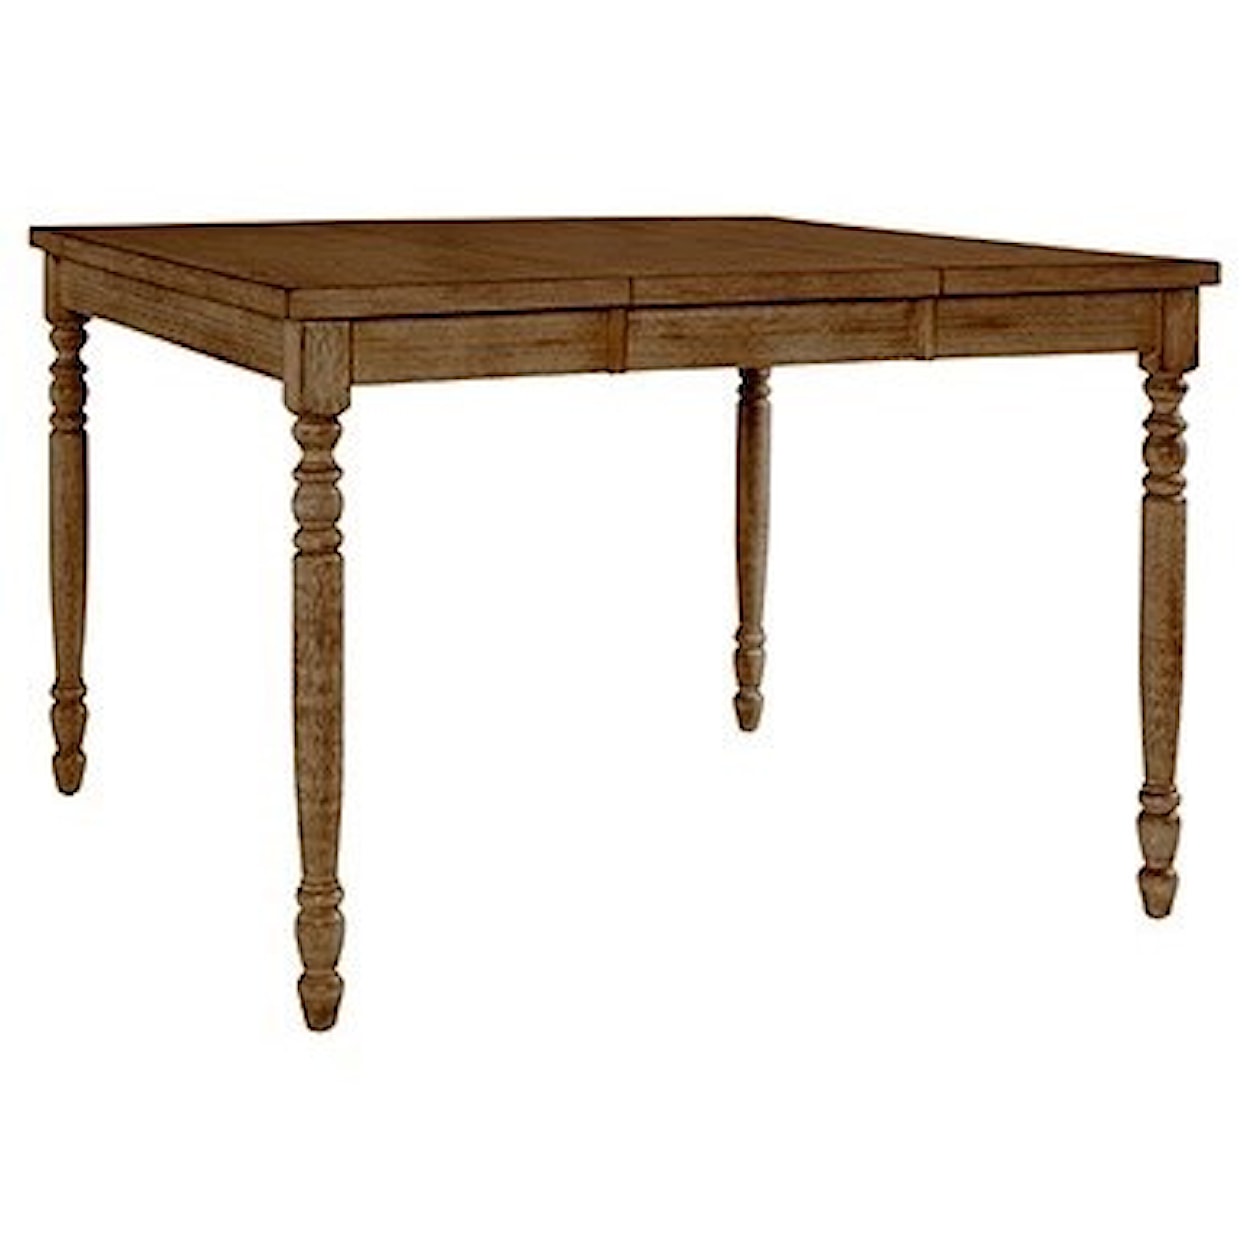 Progressive Furniture Savannah Court Counter Table